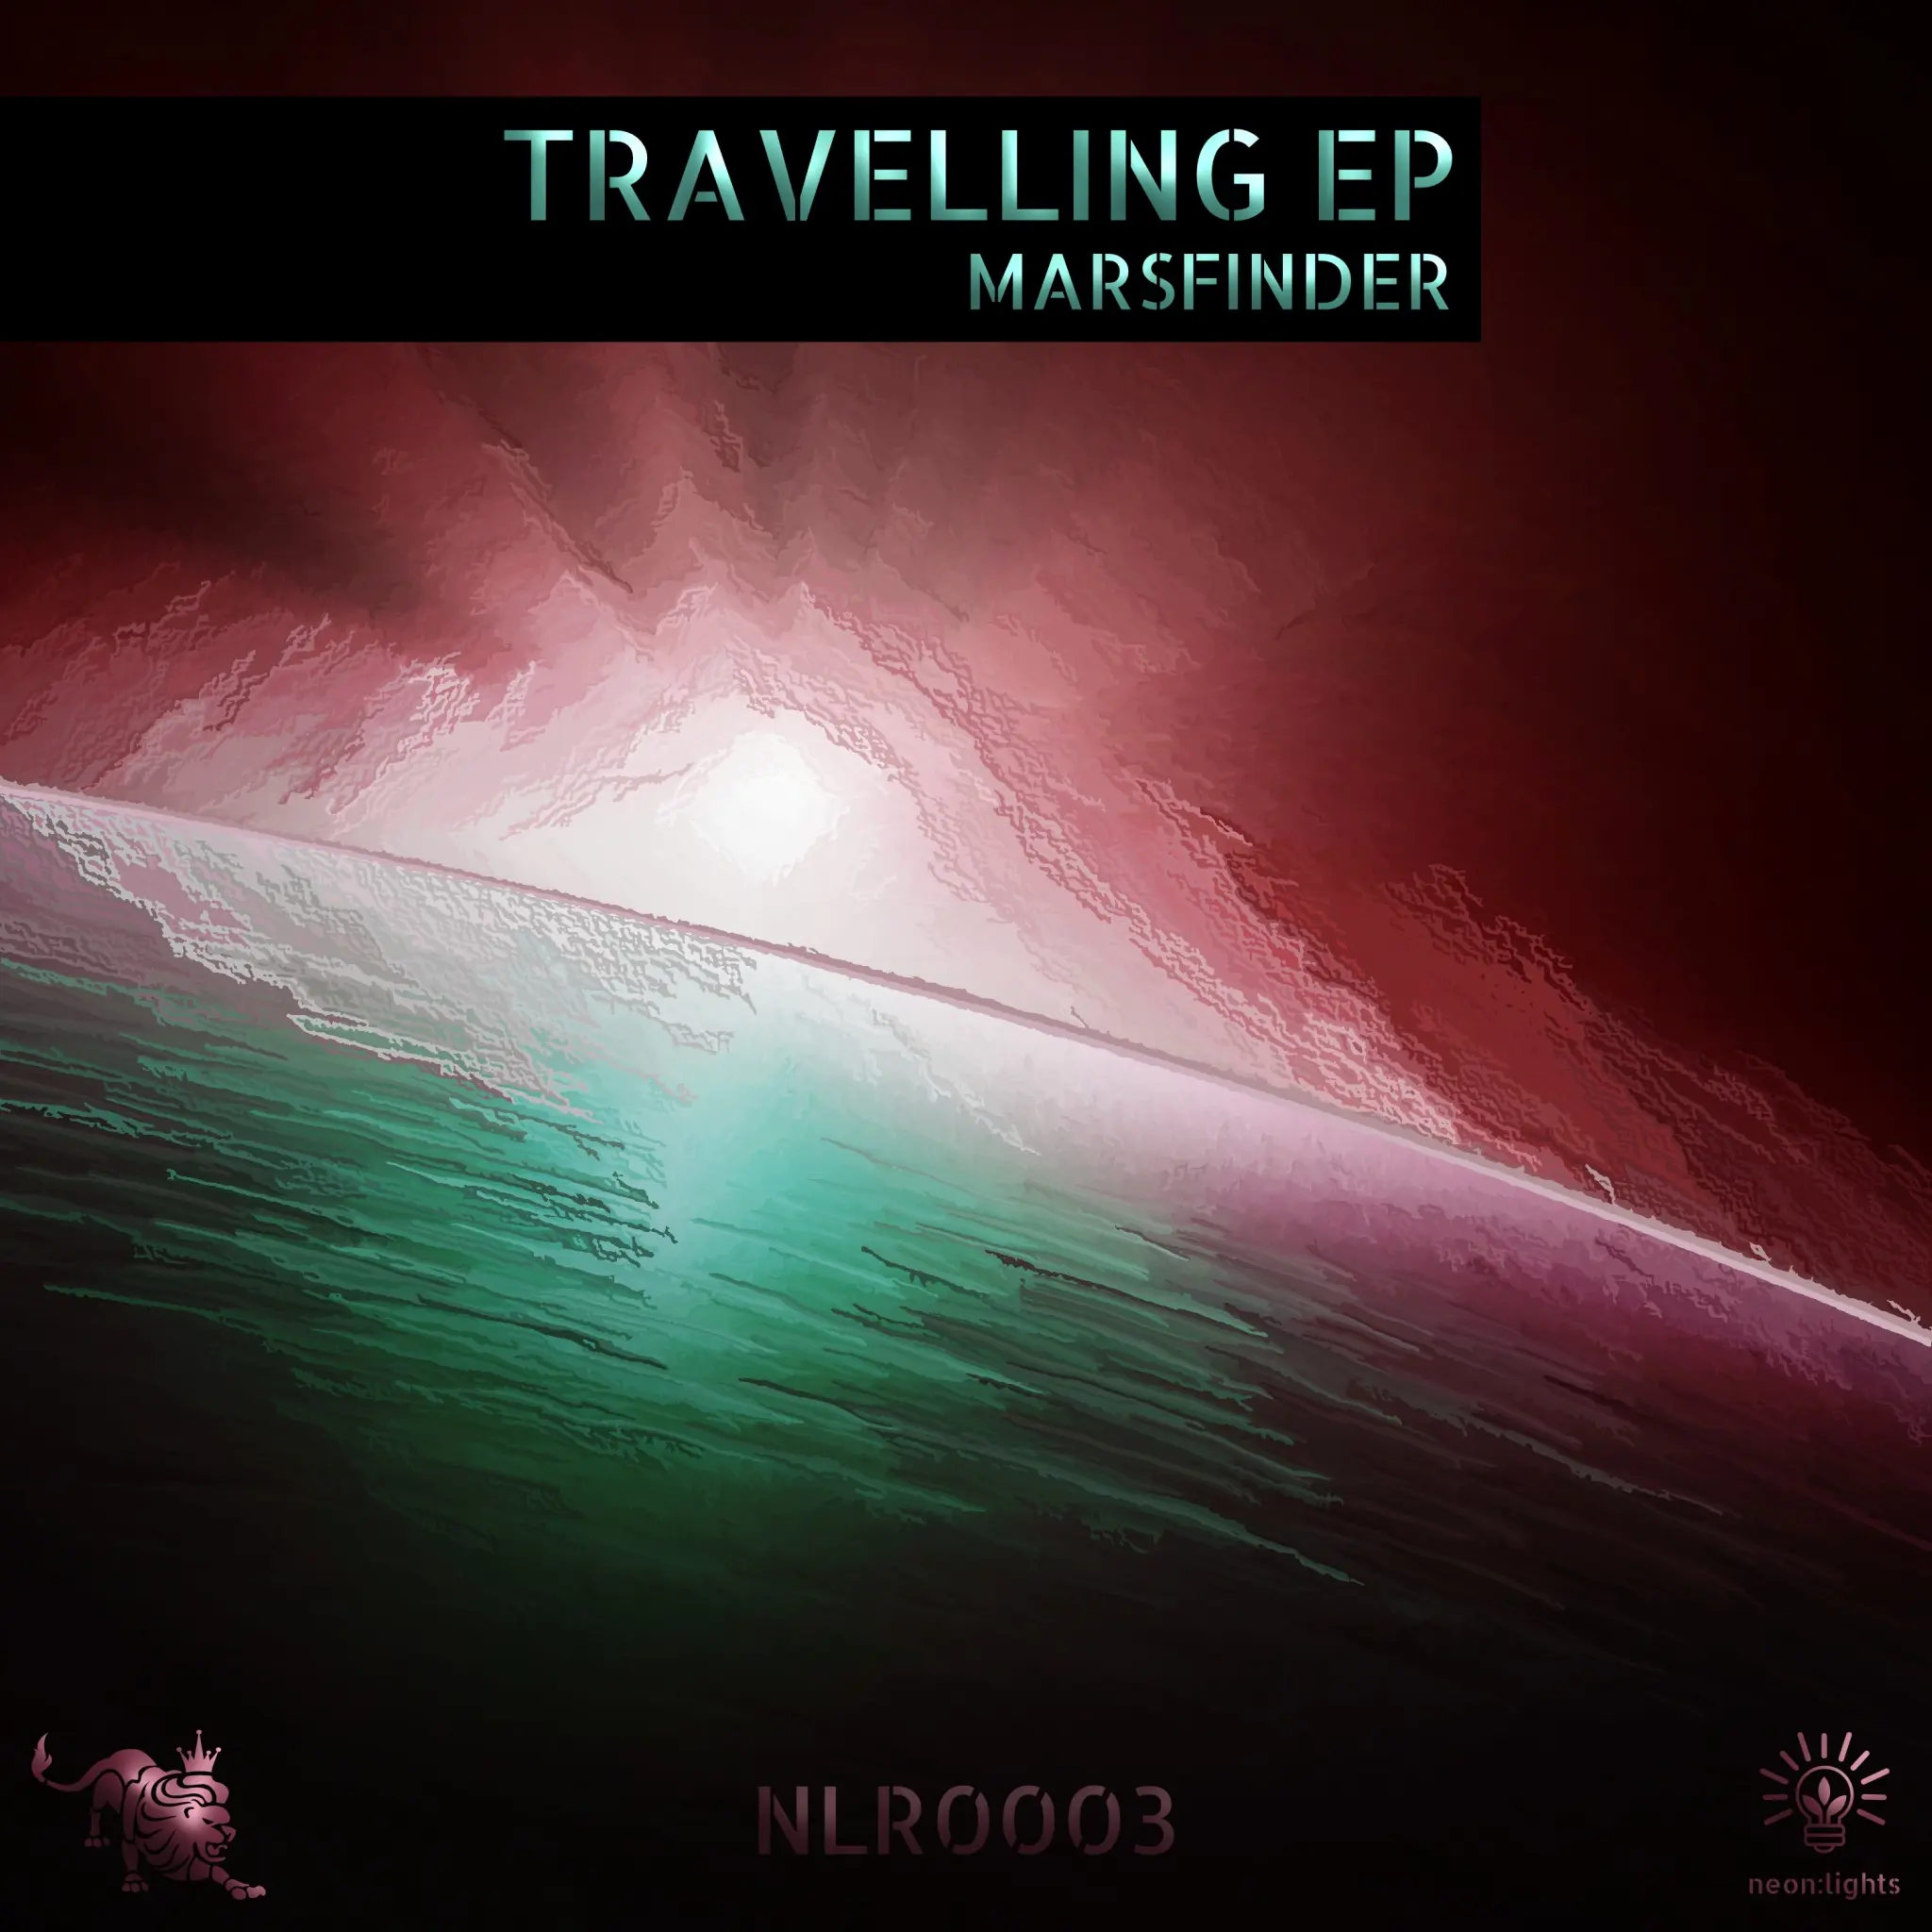 Marsfinder - Travelling EP